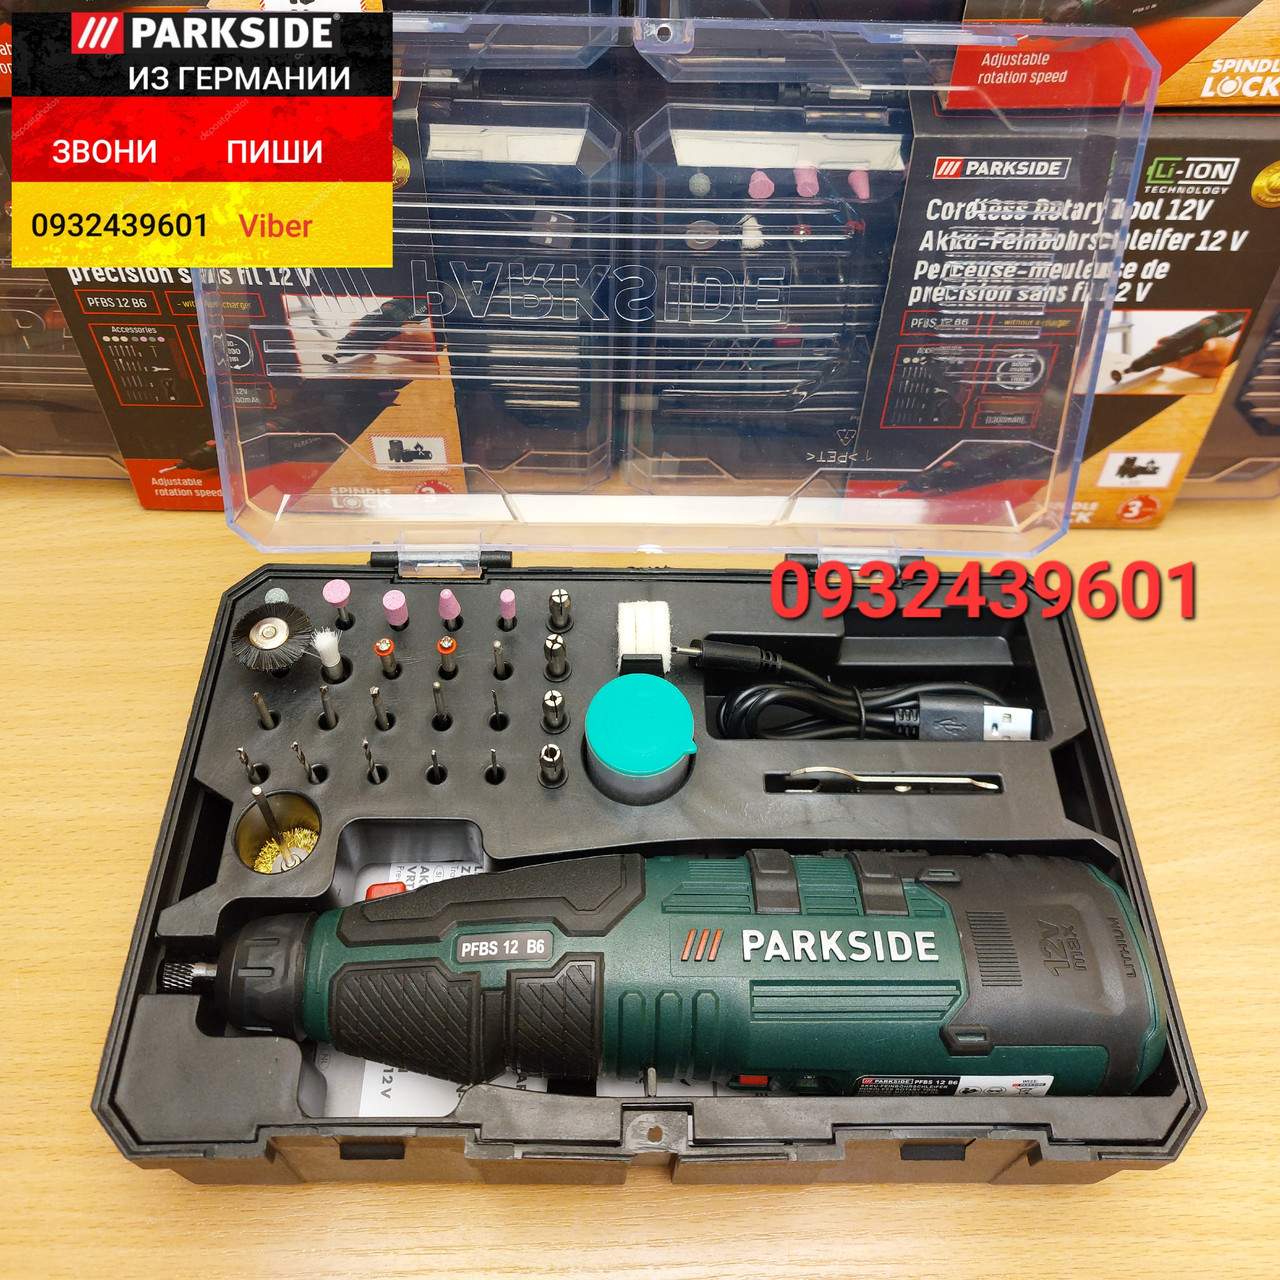 Аккумуляторный гравер Parkside PFBS 12 B6 из ГЕРМАНИИ (ID#1506199060),  цена: 1390 ₴, купить на